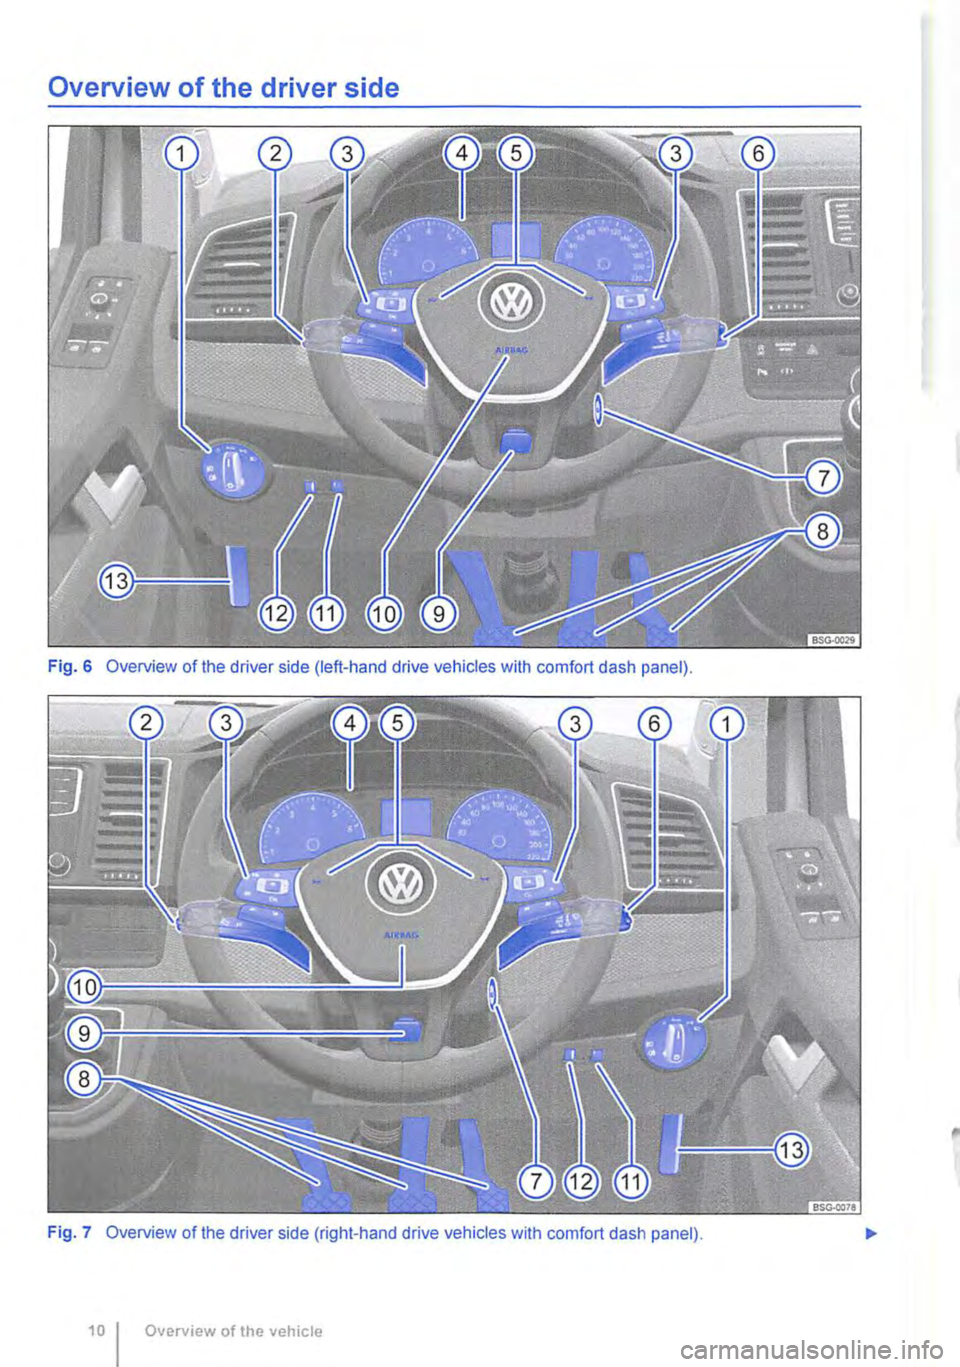 VOLKSWAGEN TRANSPORTER 2015  Owner´s Manual Overview of the driver side 
Fig. 6 Overview of the driver side (left-hand drive vehicles with comfort dash panel). 
Fig. 7 Overview of the driver side (right-hand drive vehicles with comfort dash pan